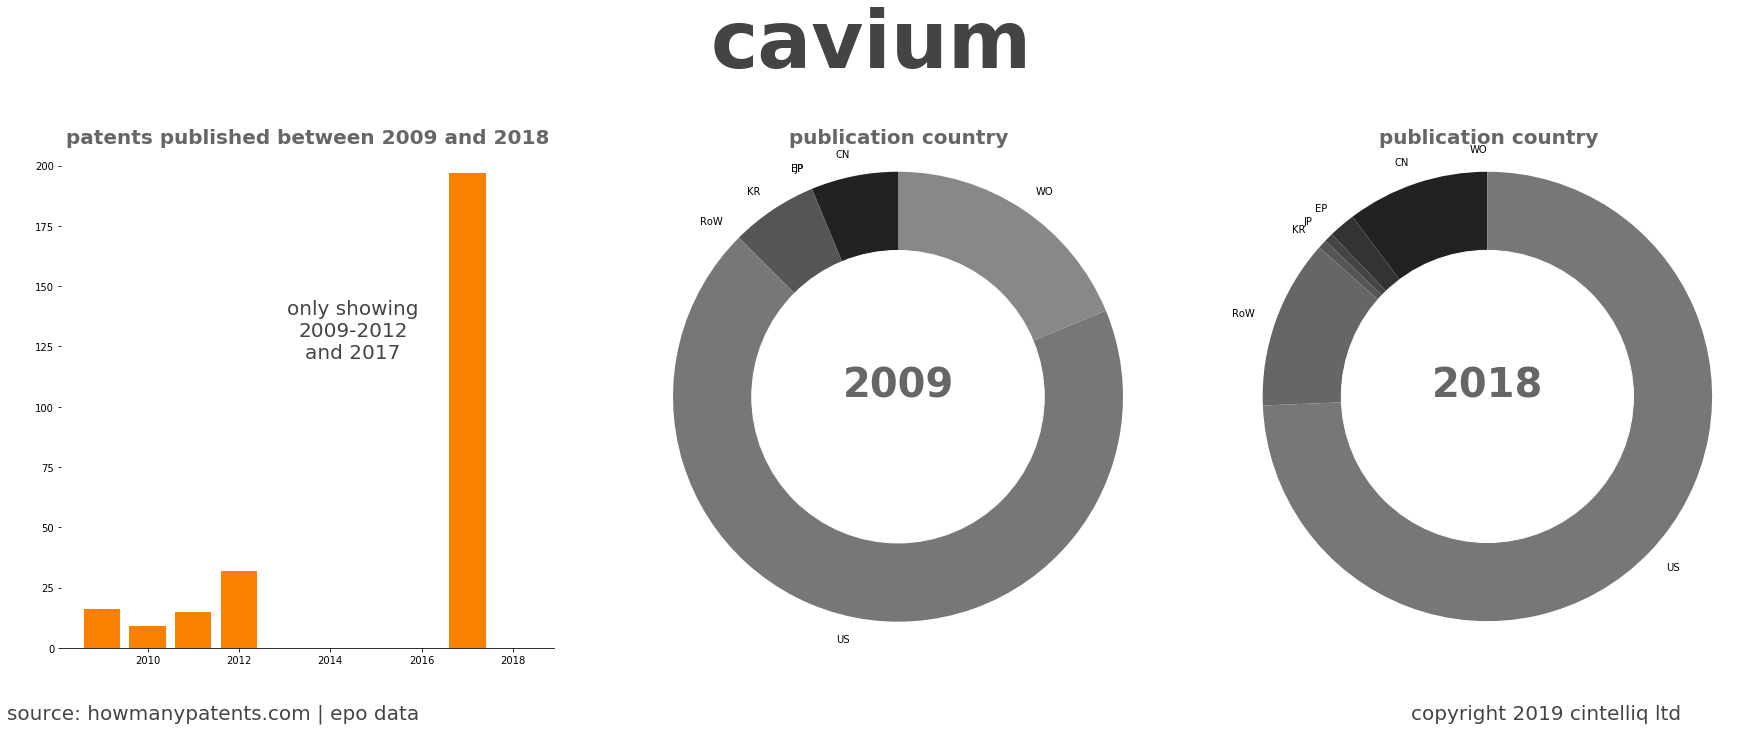 summary of patents for Cavium